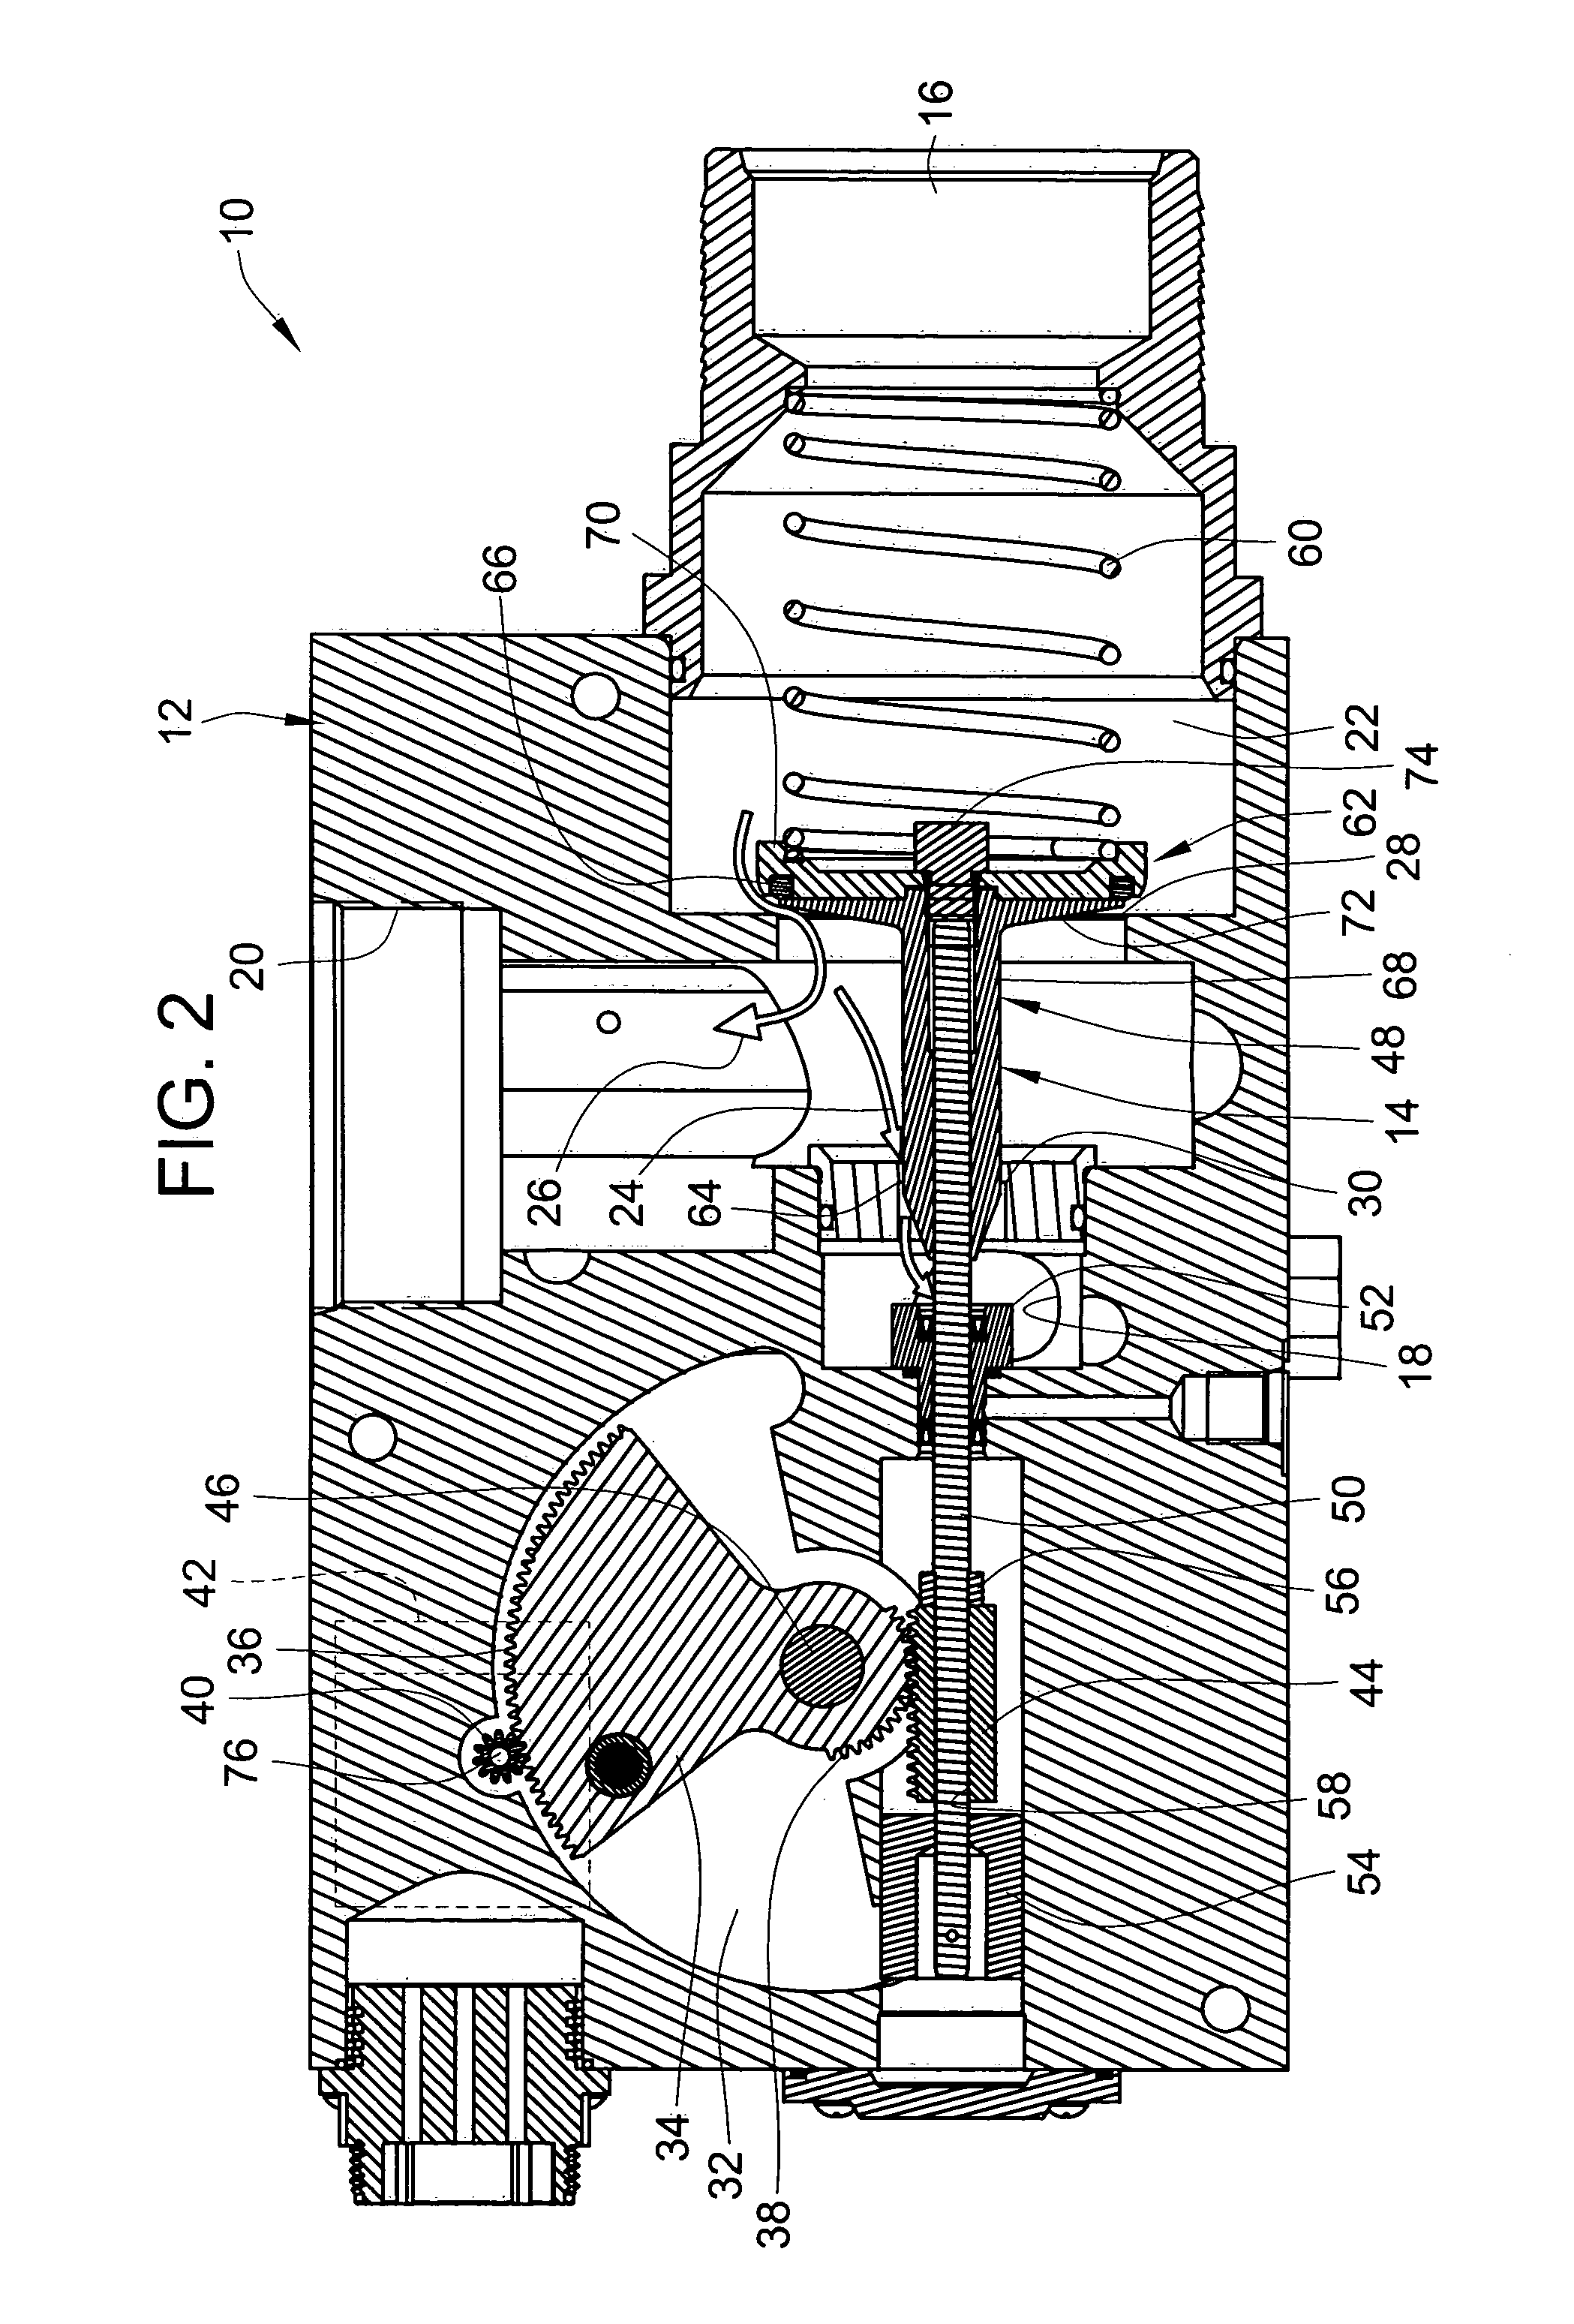 Fluid metering valve